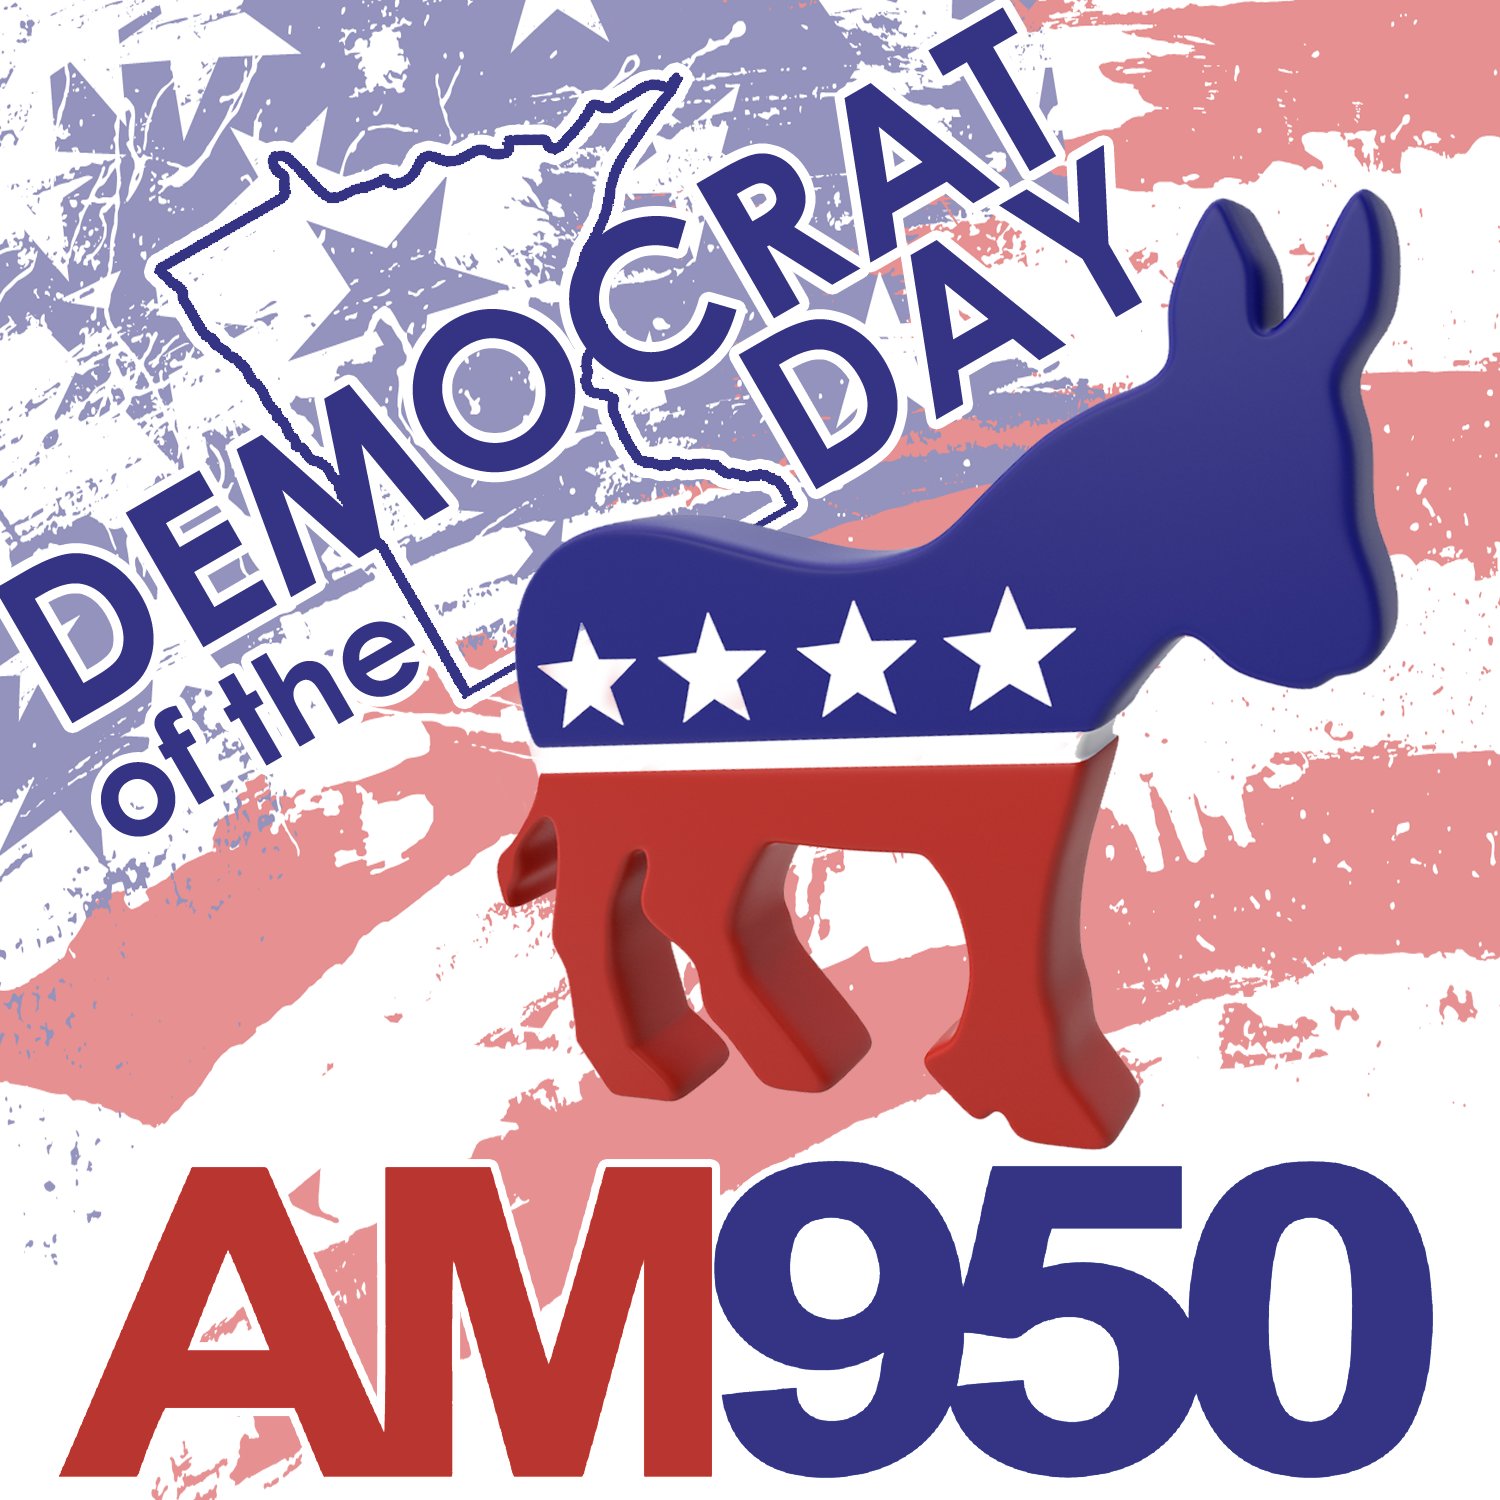 Democrat of the Day - AM950 The Progressive Voice of Minnesota